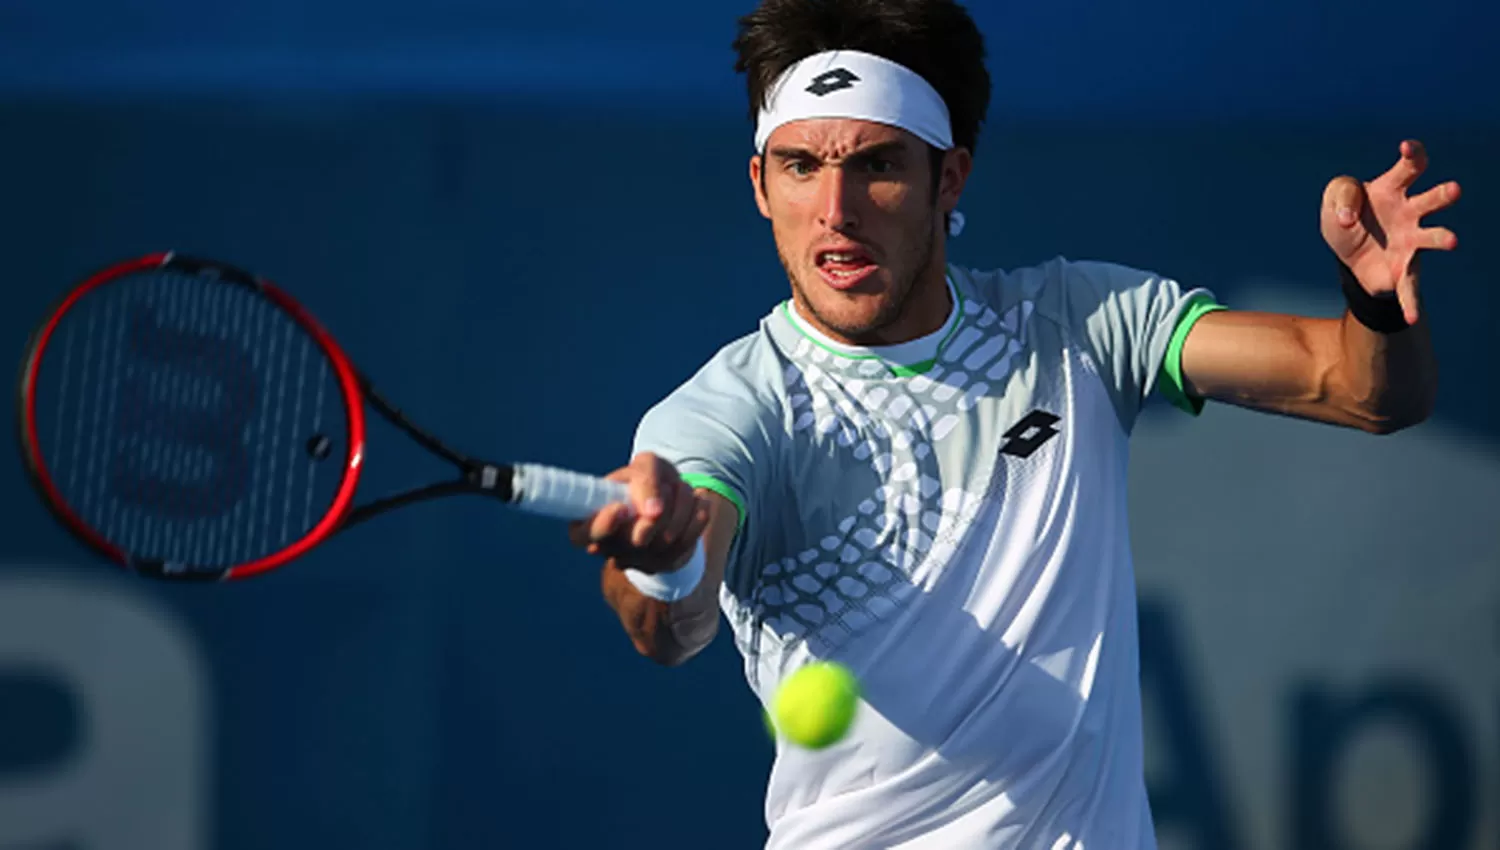 Leonardo Mayer se ubica 62° en el ranking de la ATP. (FOTO TOMADA DE www.livetennis.com)